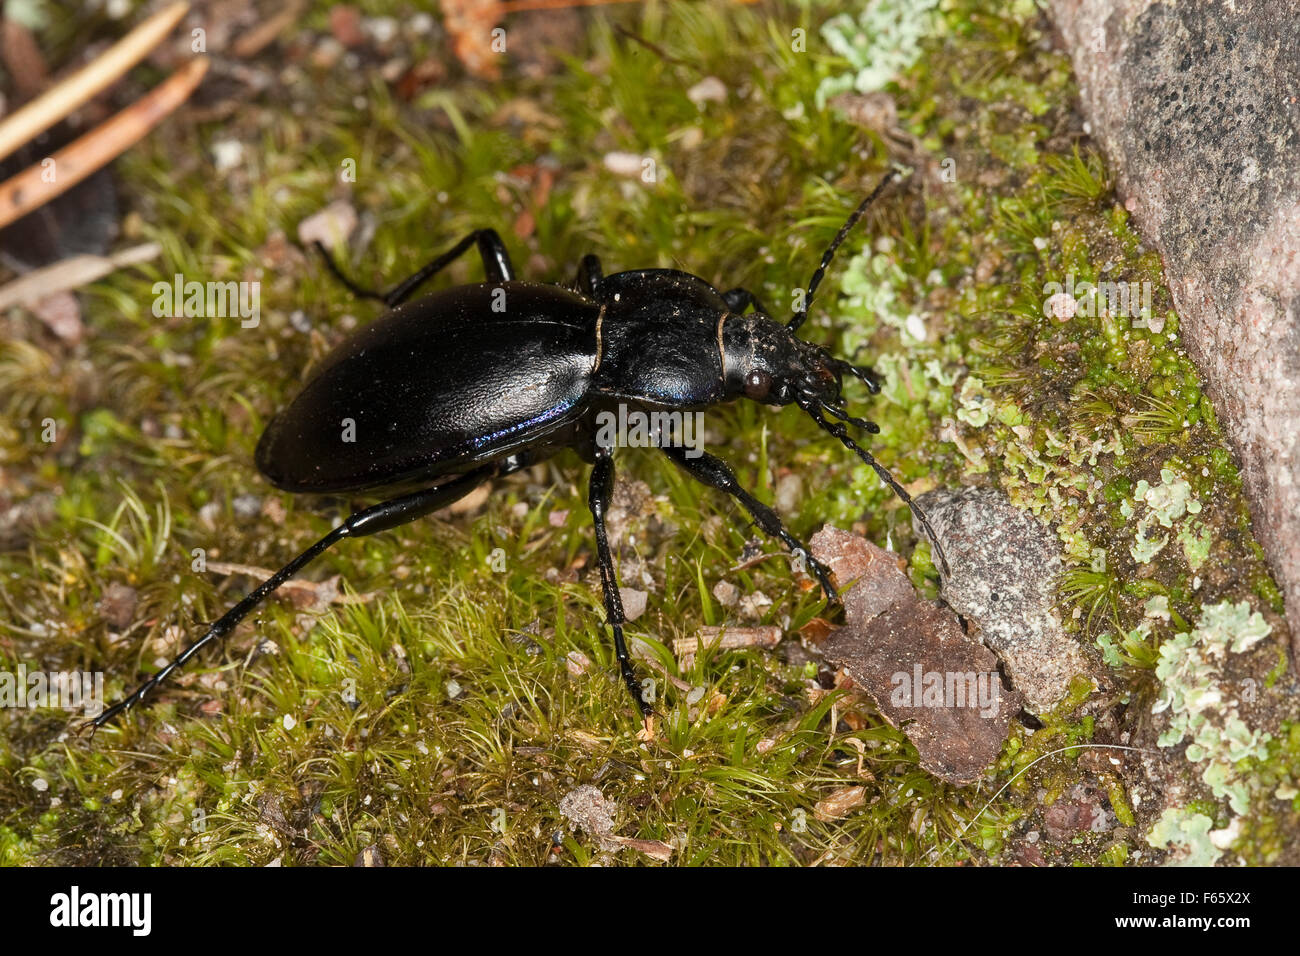 Massa viola beetle, Goldleiste, Purpur-Laufkäfer, Purpurlaufkäfer, Laufkäfer, Carabus tendente al violaceo Foto Stock